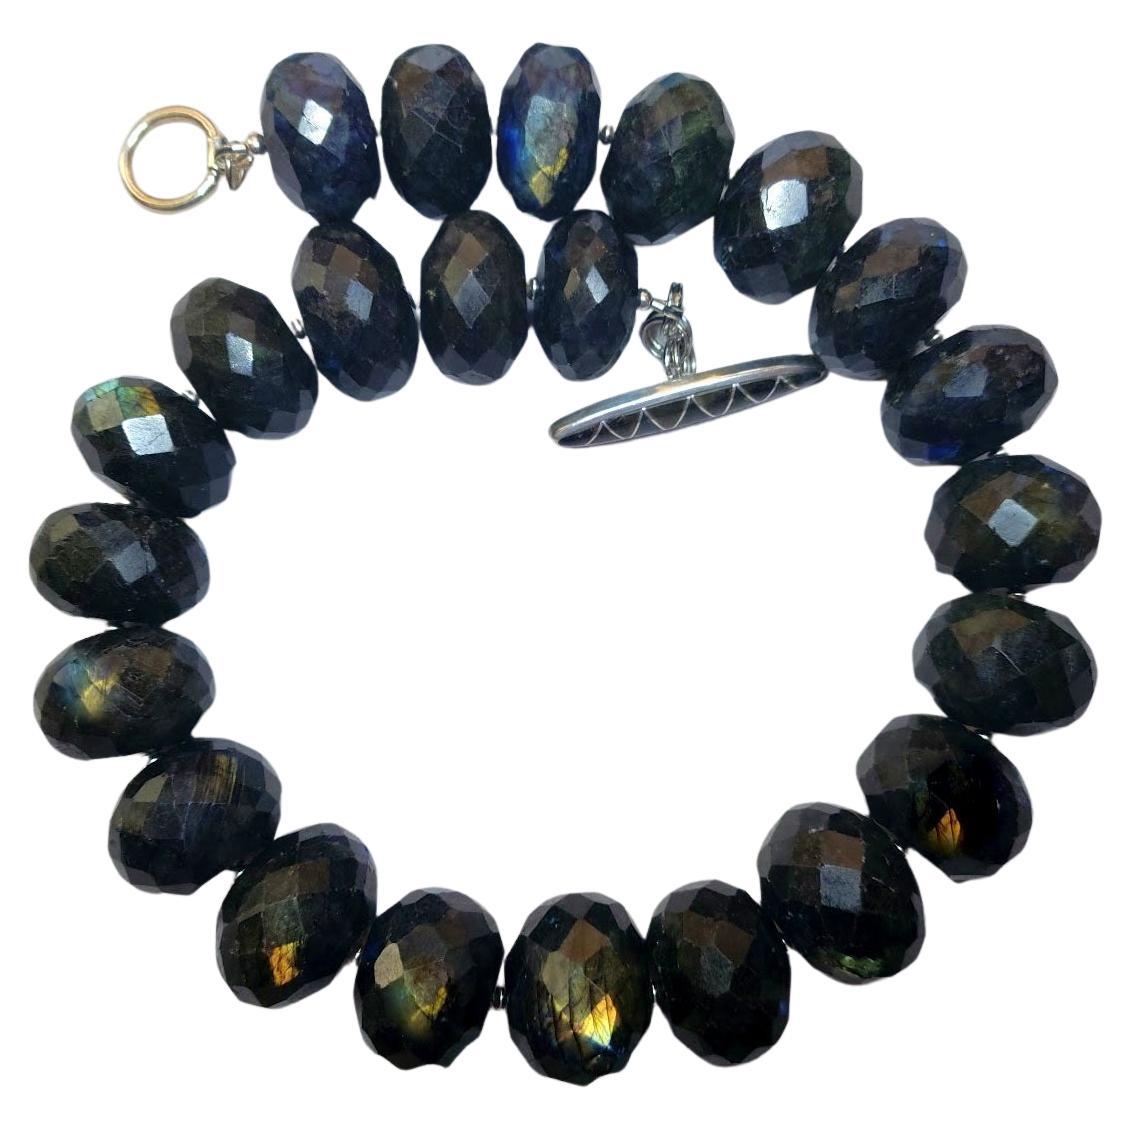 Handmade 10-20mm Chrysocolla Beaded Graduated Necklace Jewelry 19" Free Shipping 